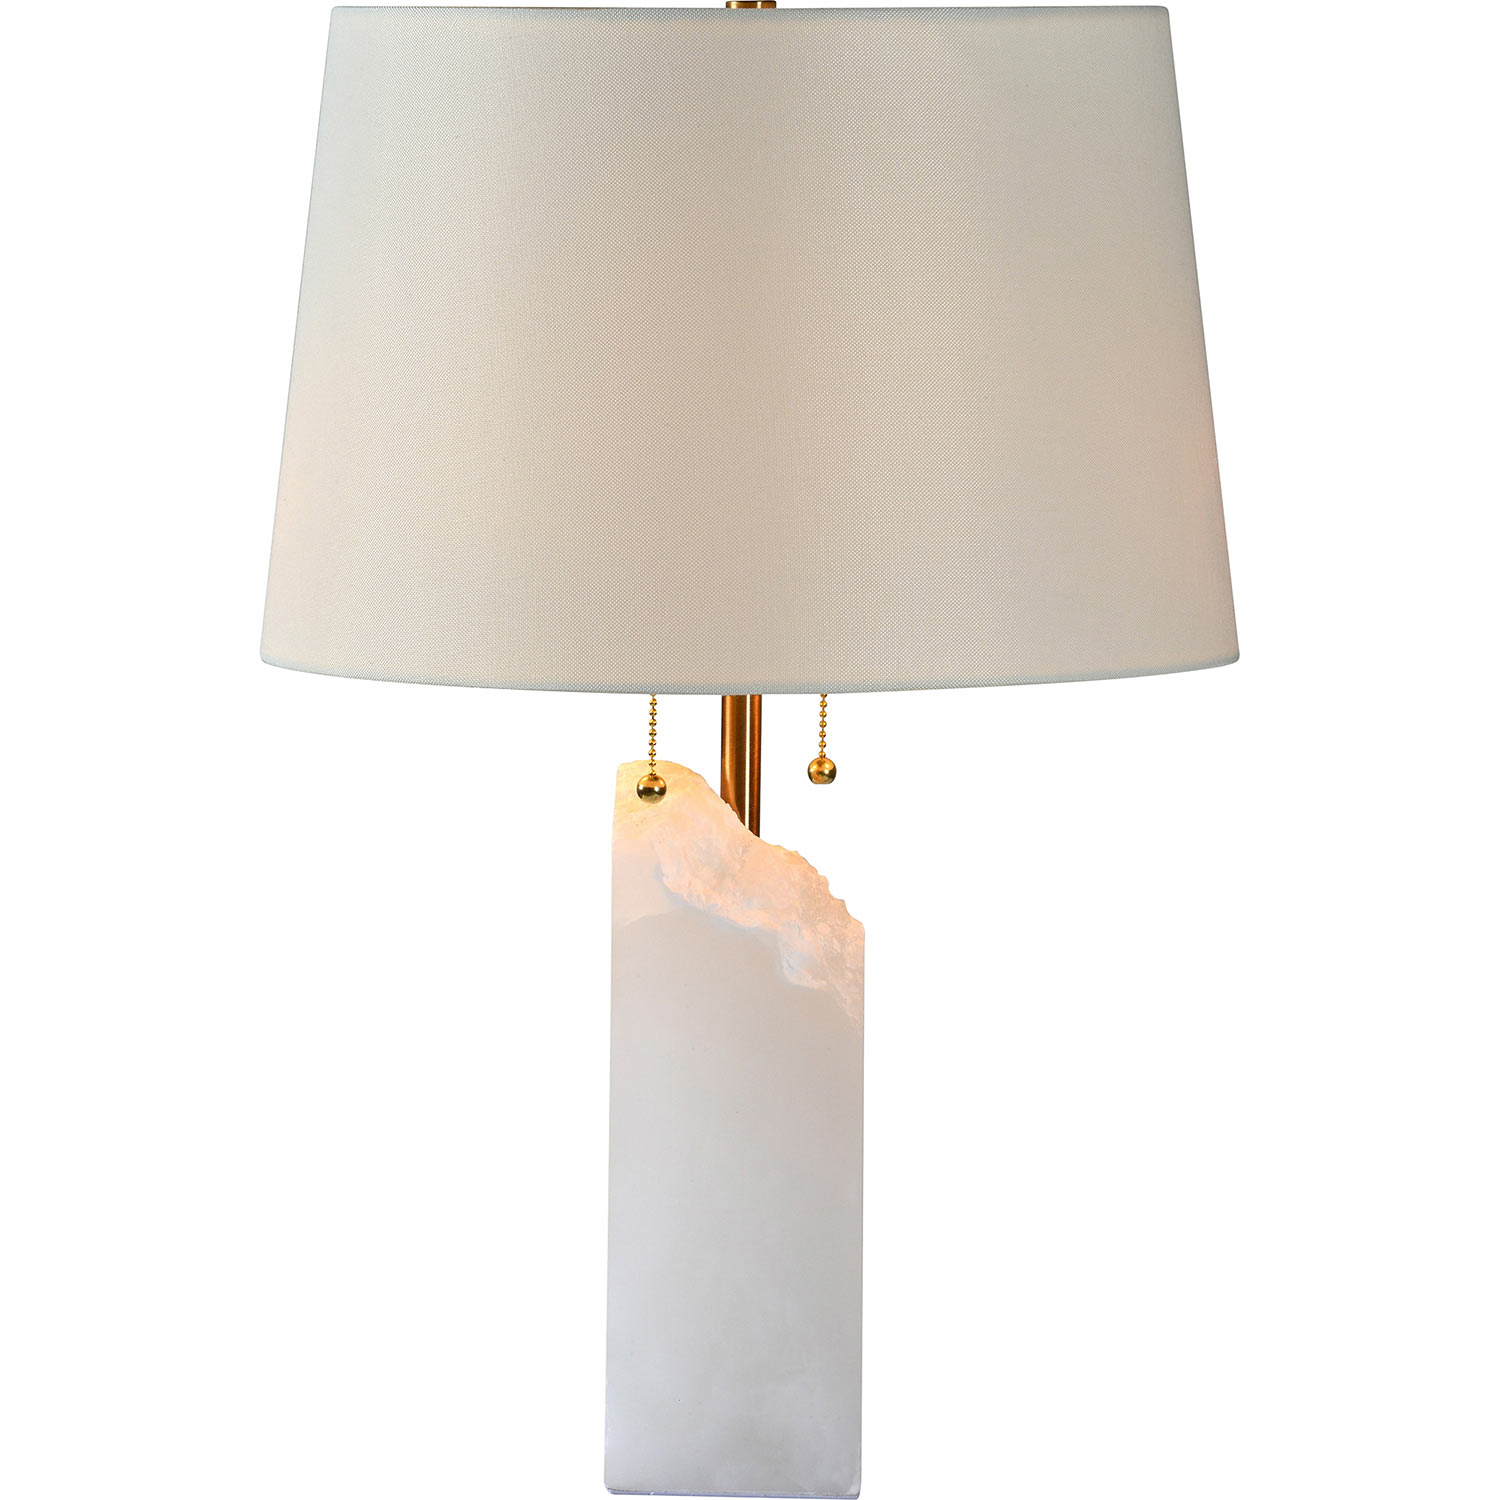 Ren-Wil Ward Table Lamp - White Marble